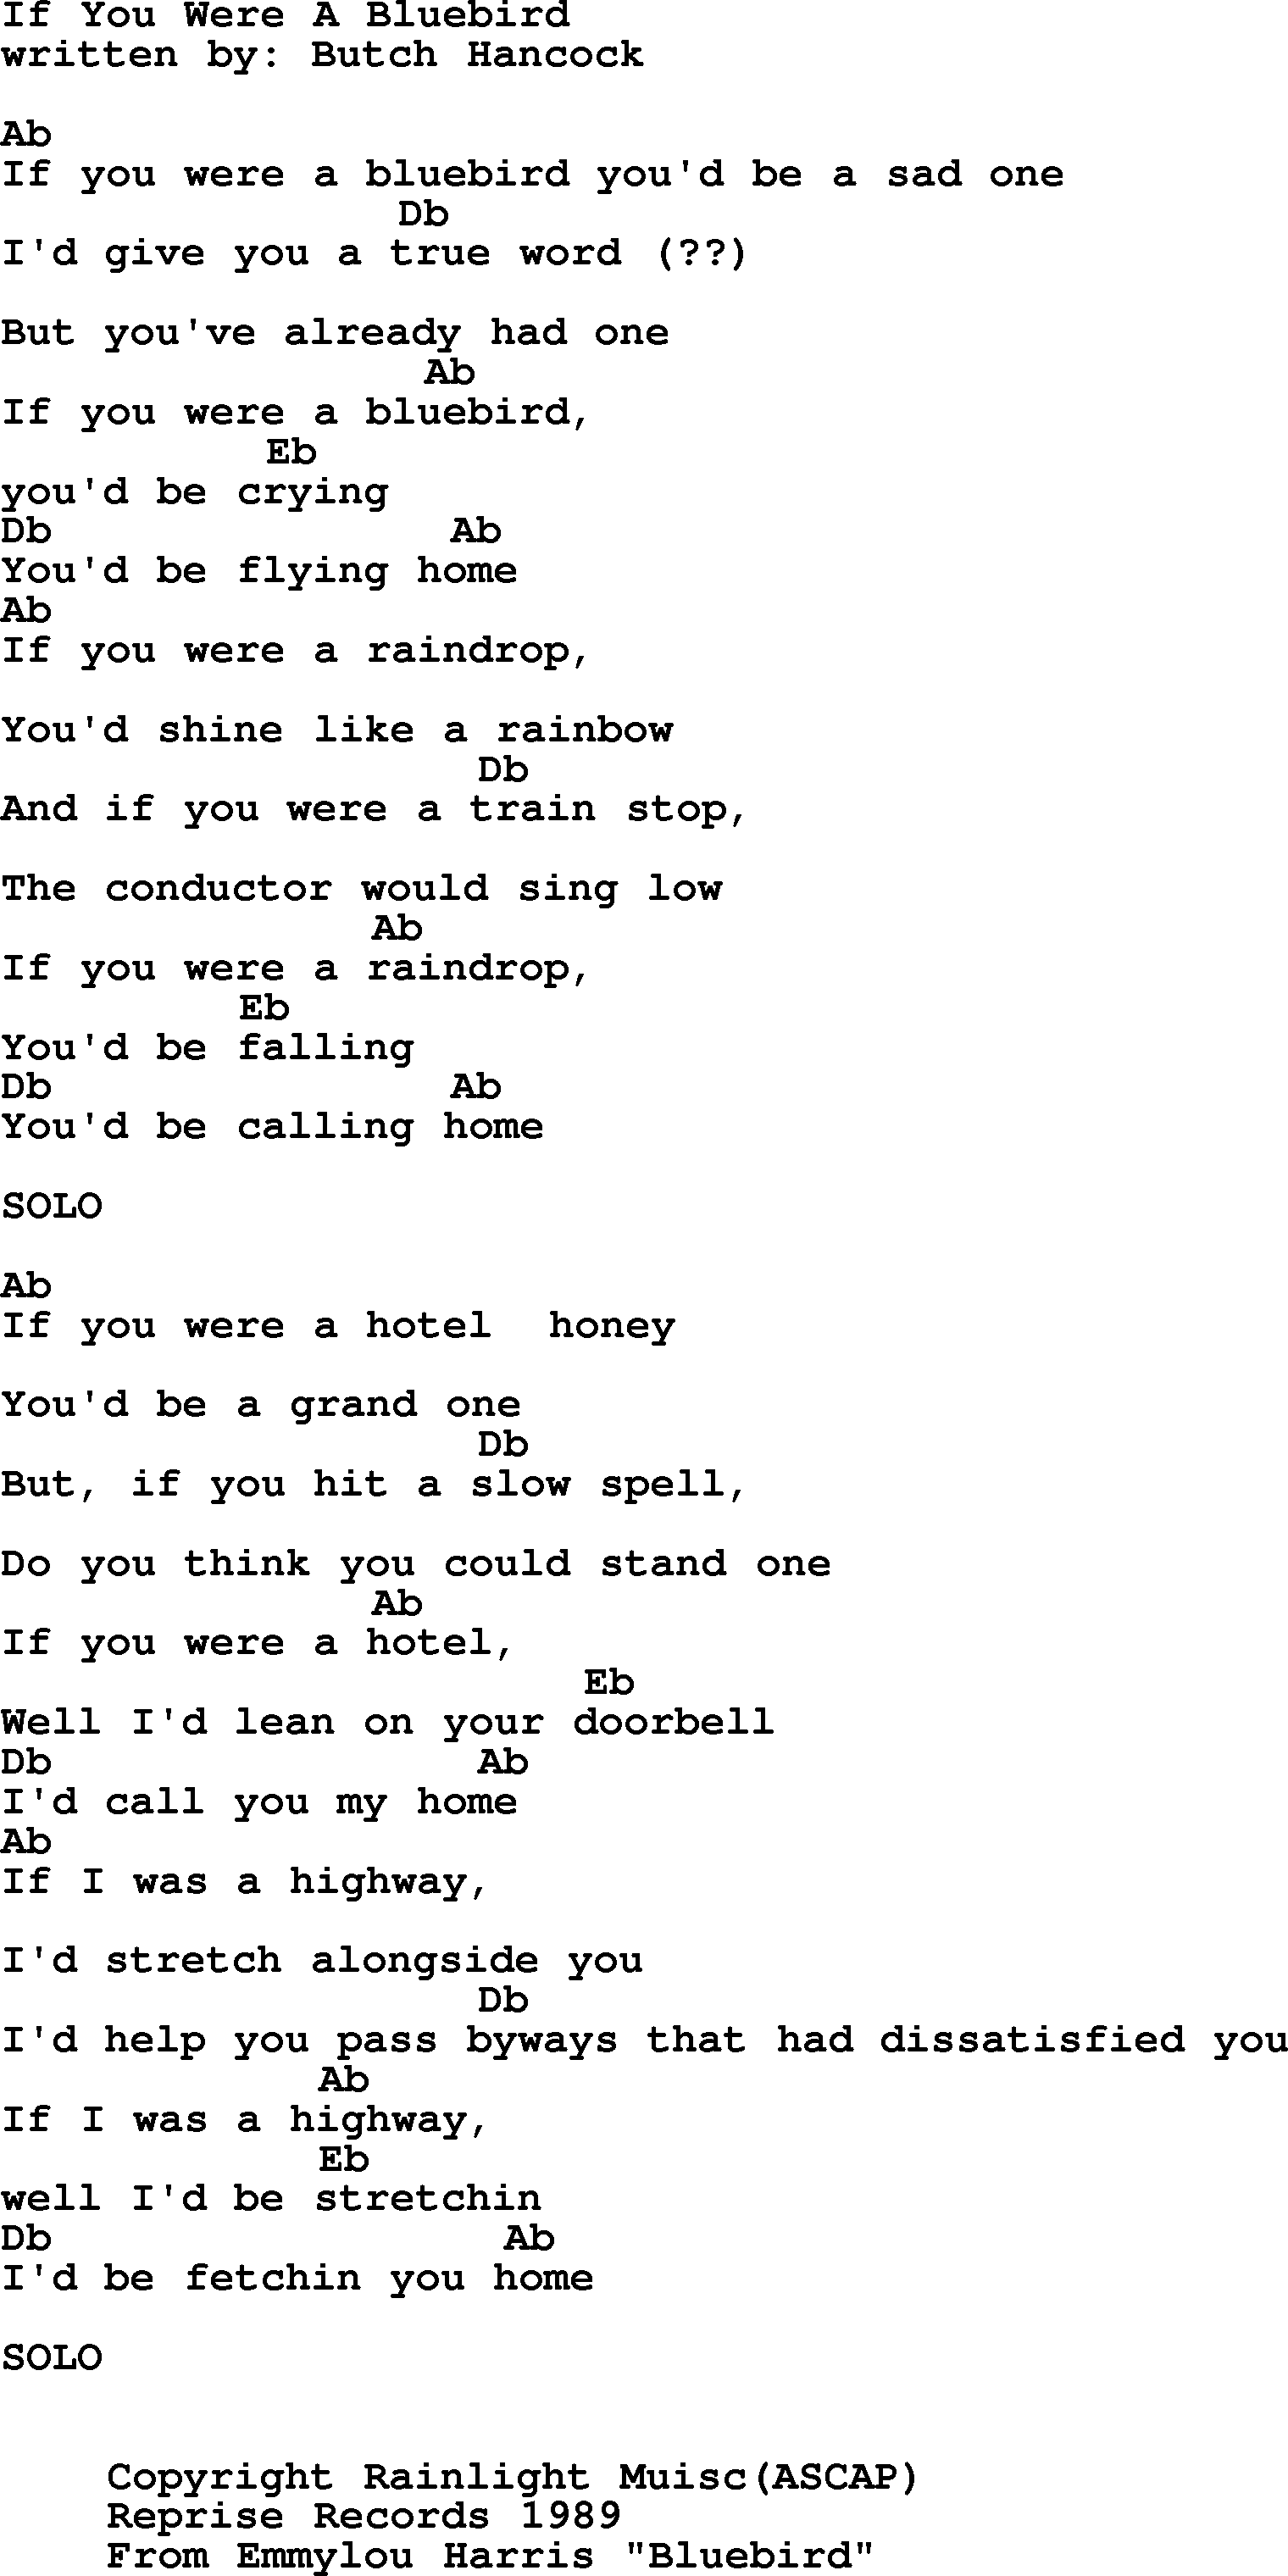 Emmylou Harris song: If You Were A Bluebird lyrics and chords